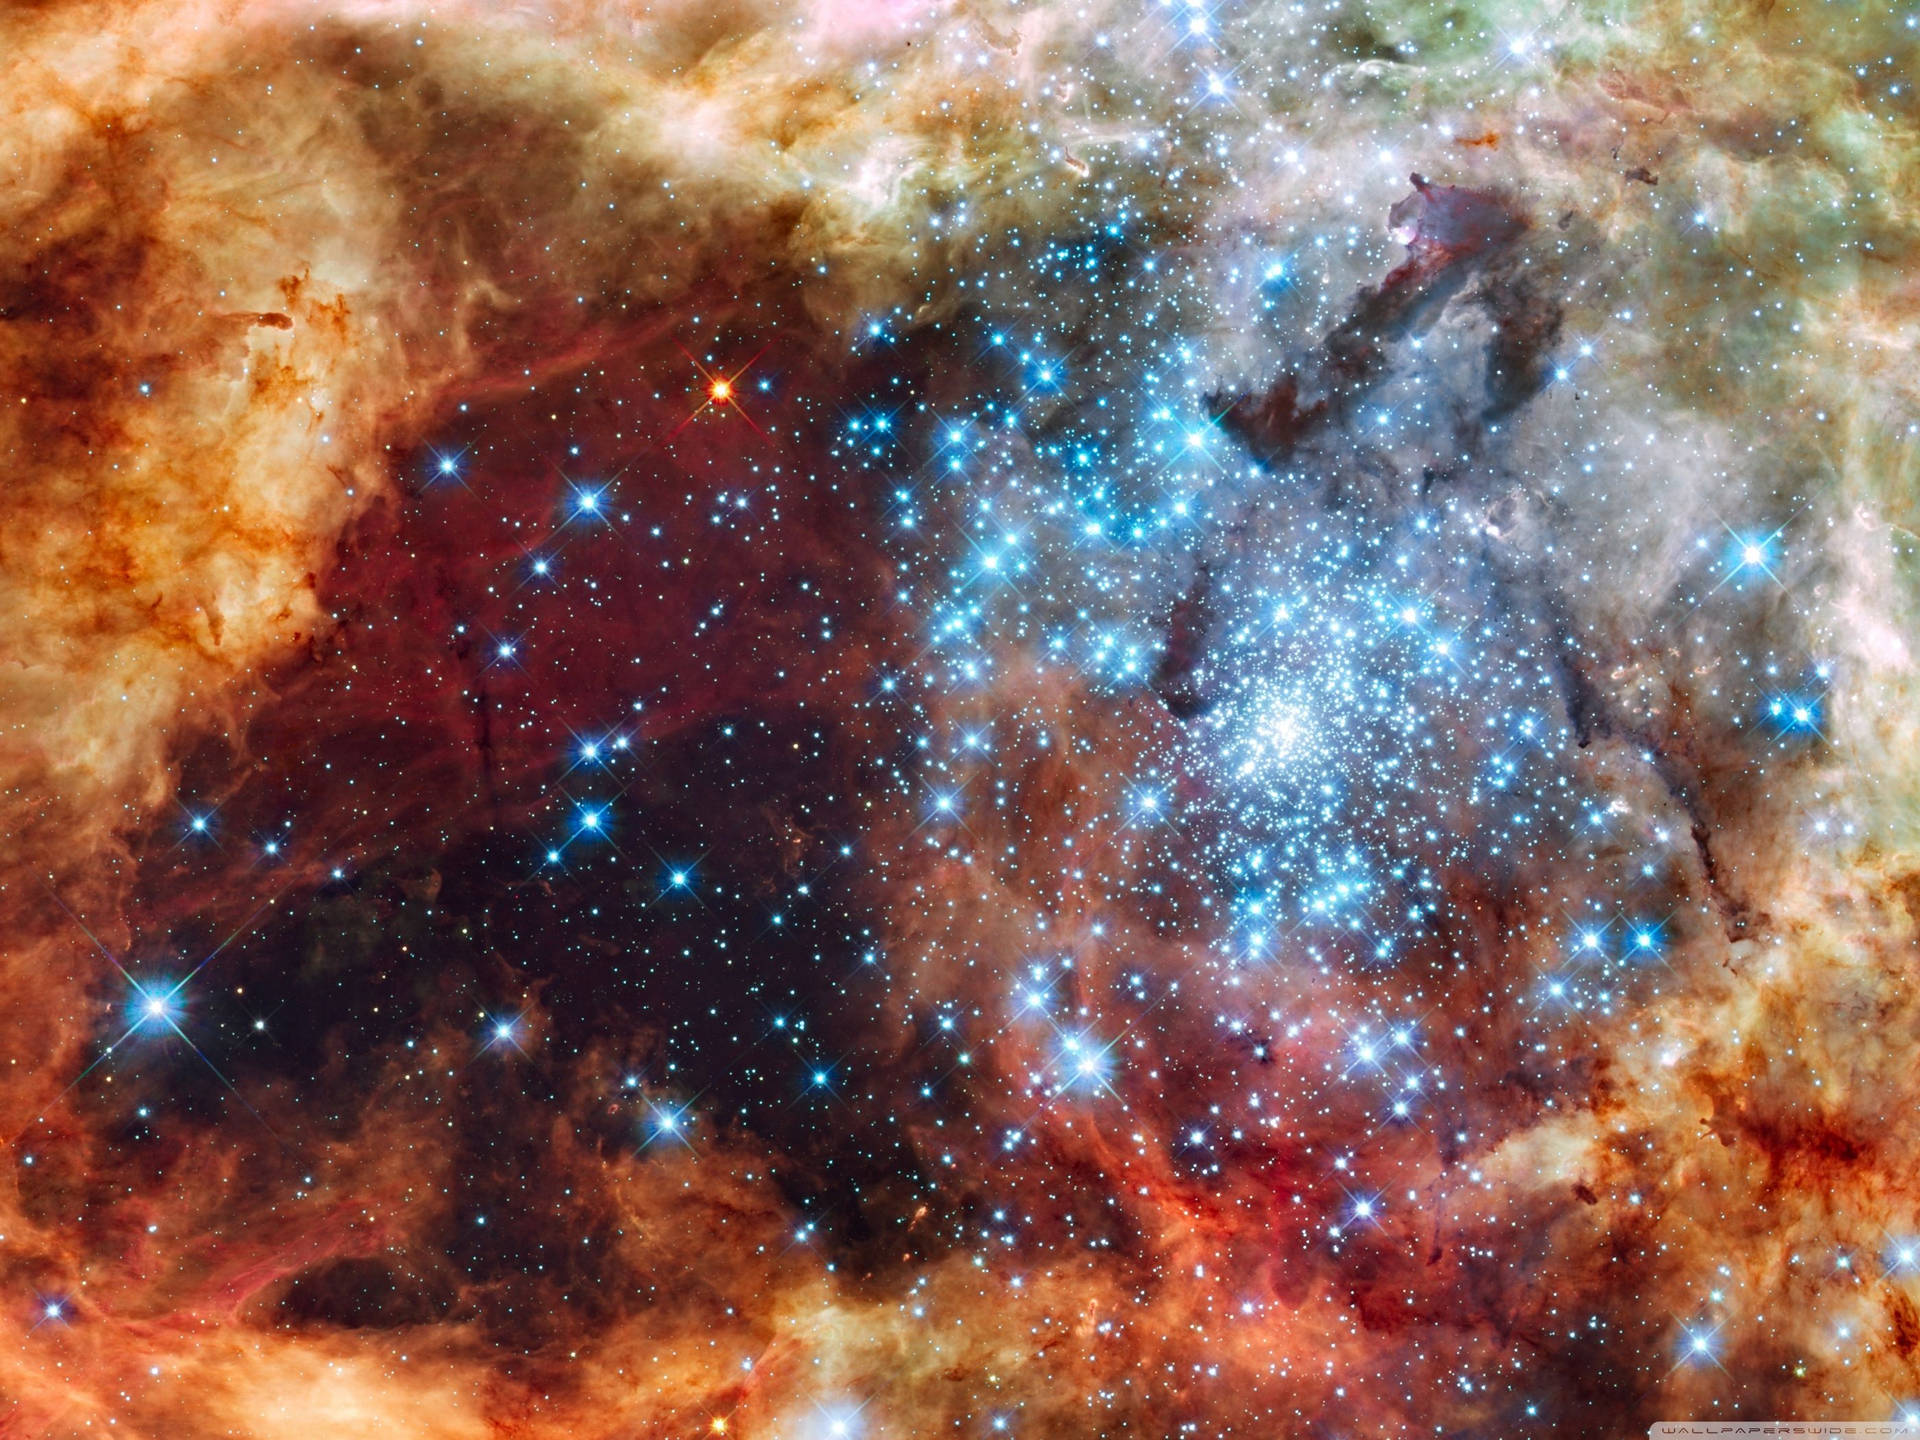 Superhohe Auflösung Galaxy Sterne Wallpaper